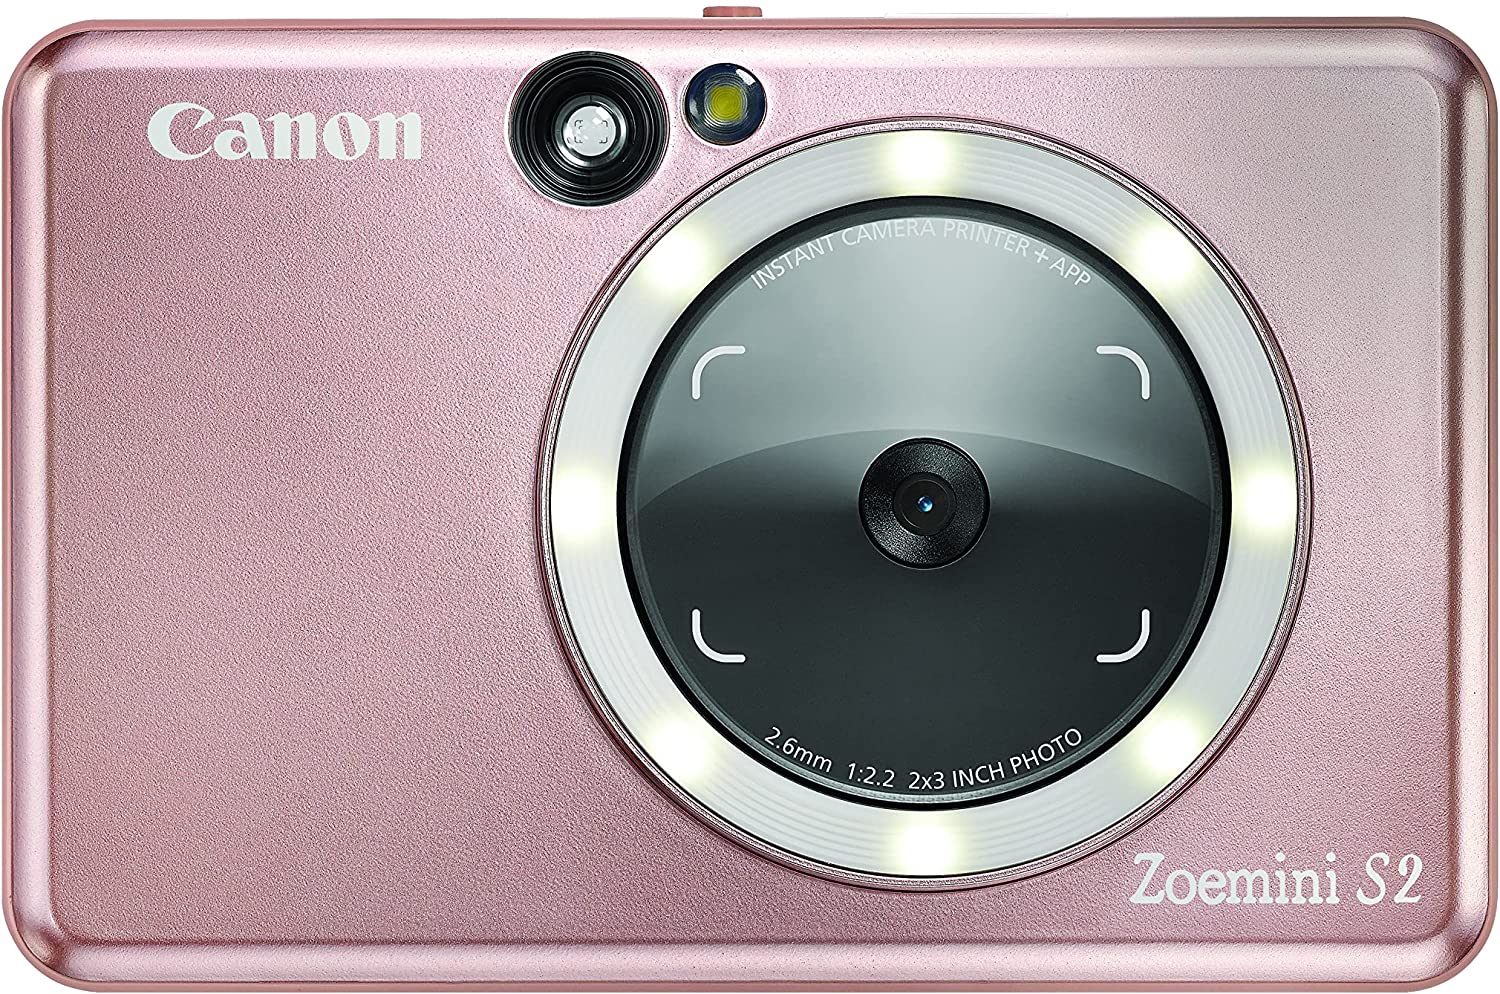 Canon Zoemini S2 - Slimline Instant Camera and Pocket Photo Printer